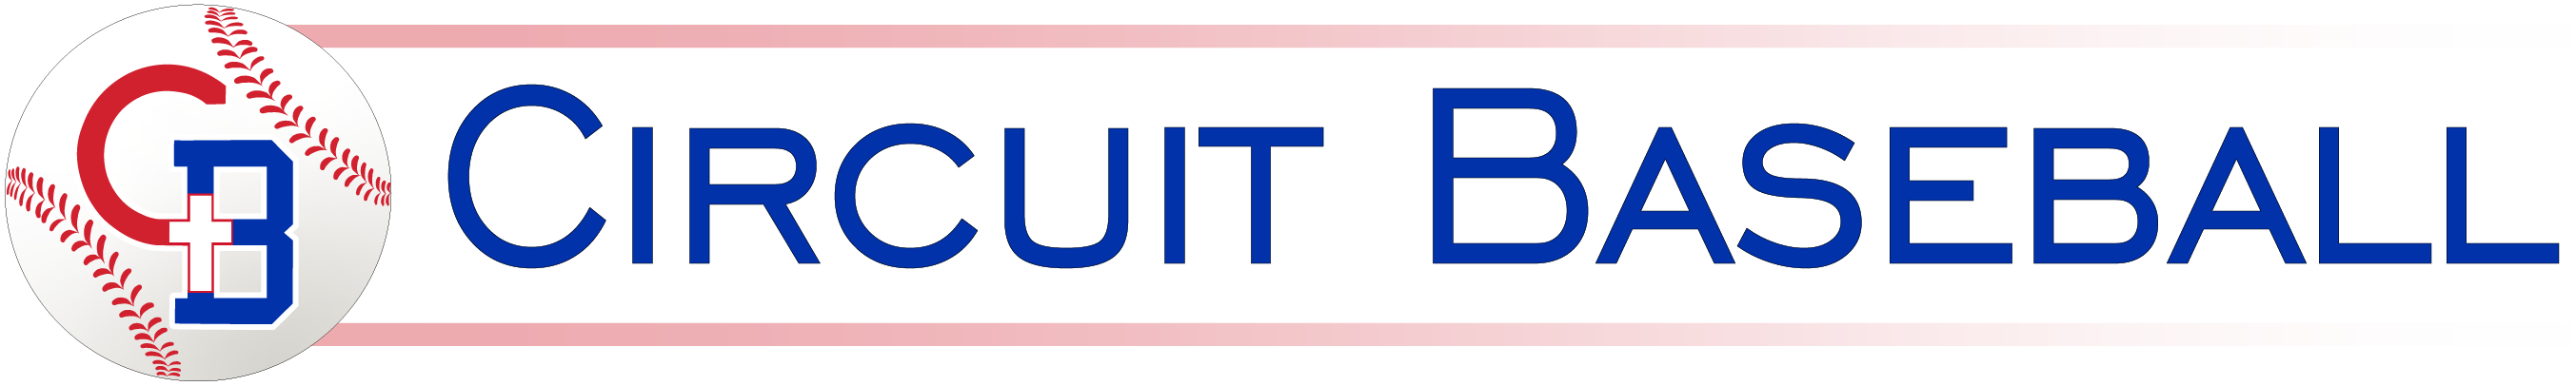 Circuit Baseball Title Logo